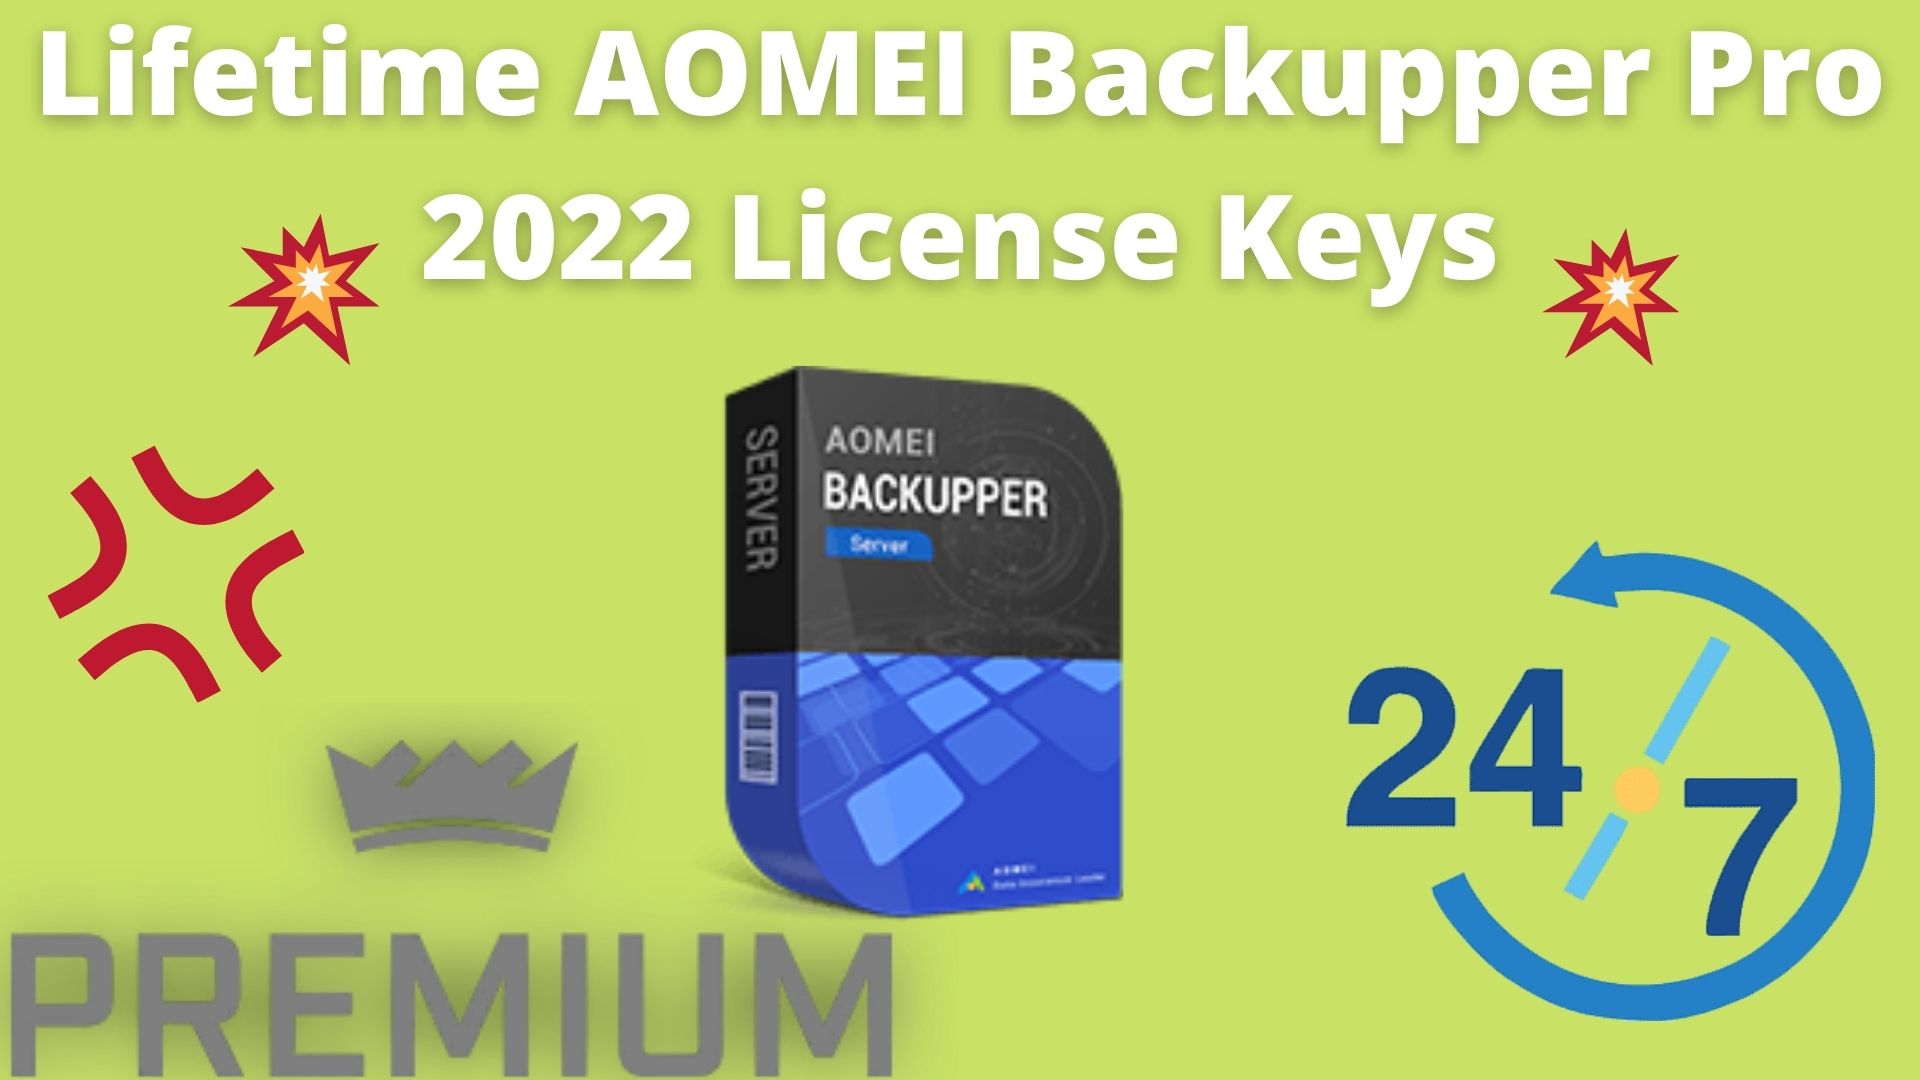 Lifetime Aomei Backupper Pro 2022 License Keys